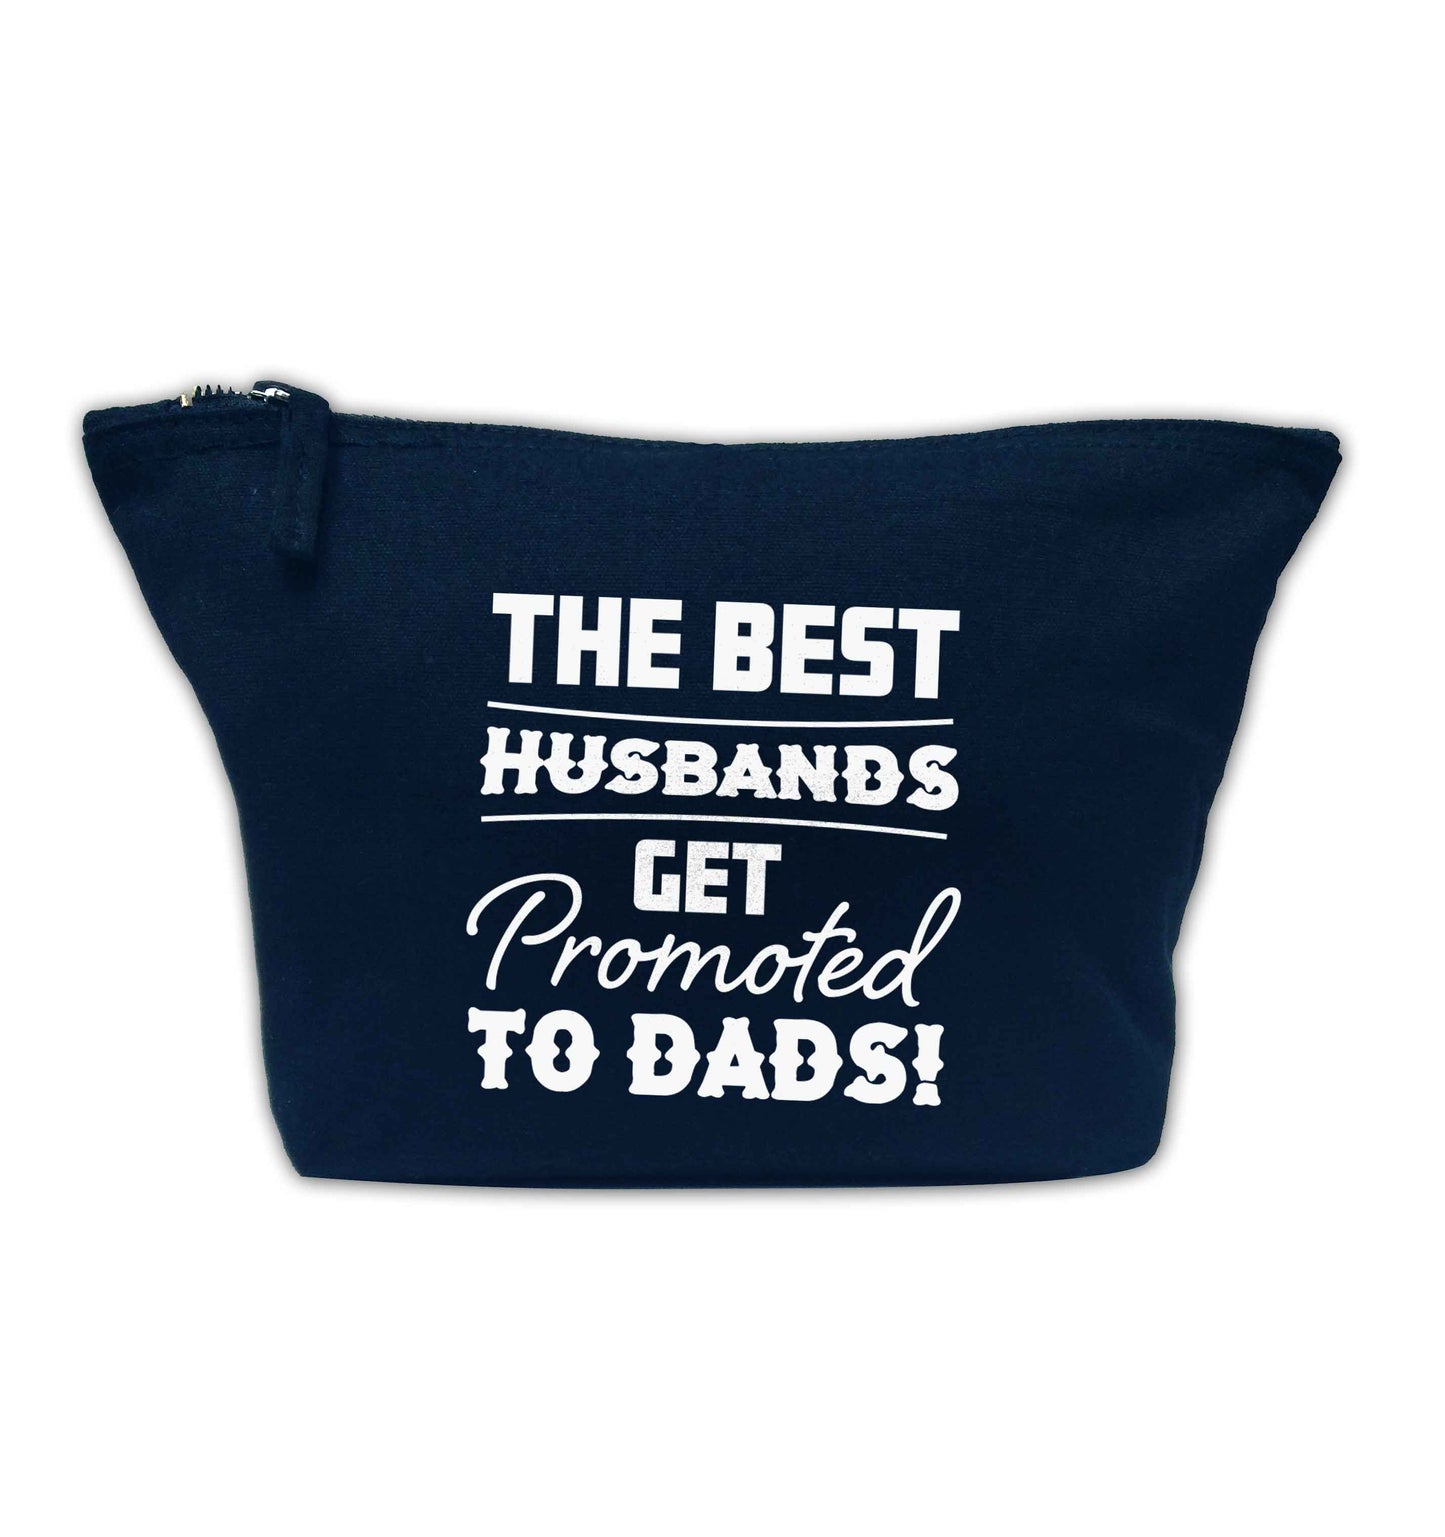 The best husbands get promoted to Dads navy makeup bag